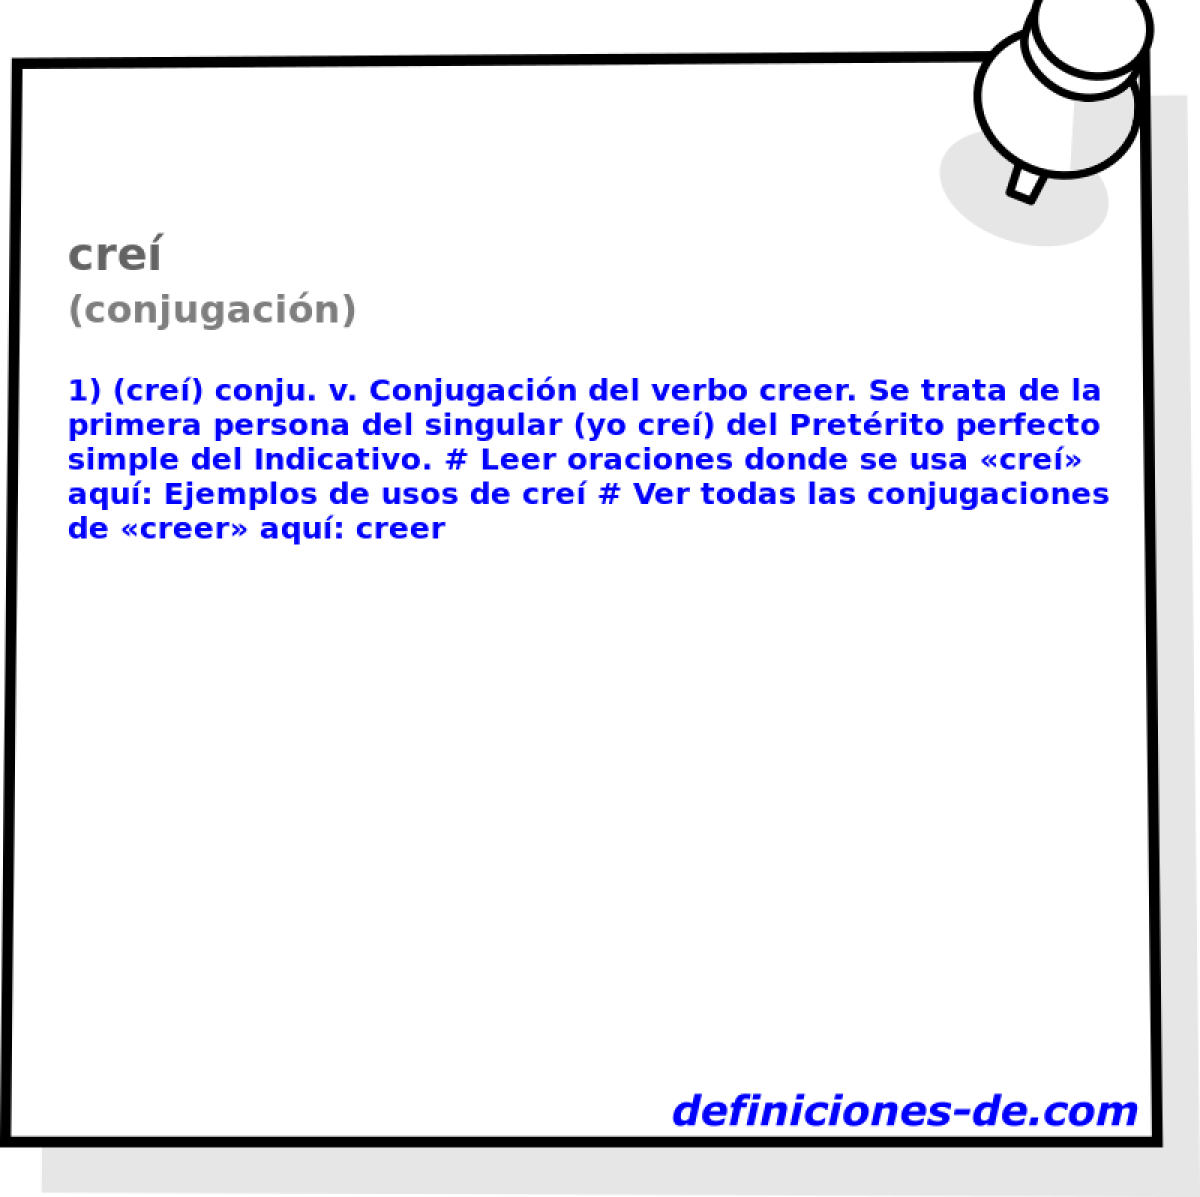 cre (conjugacin)